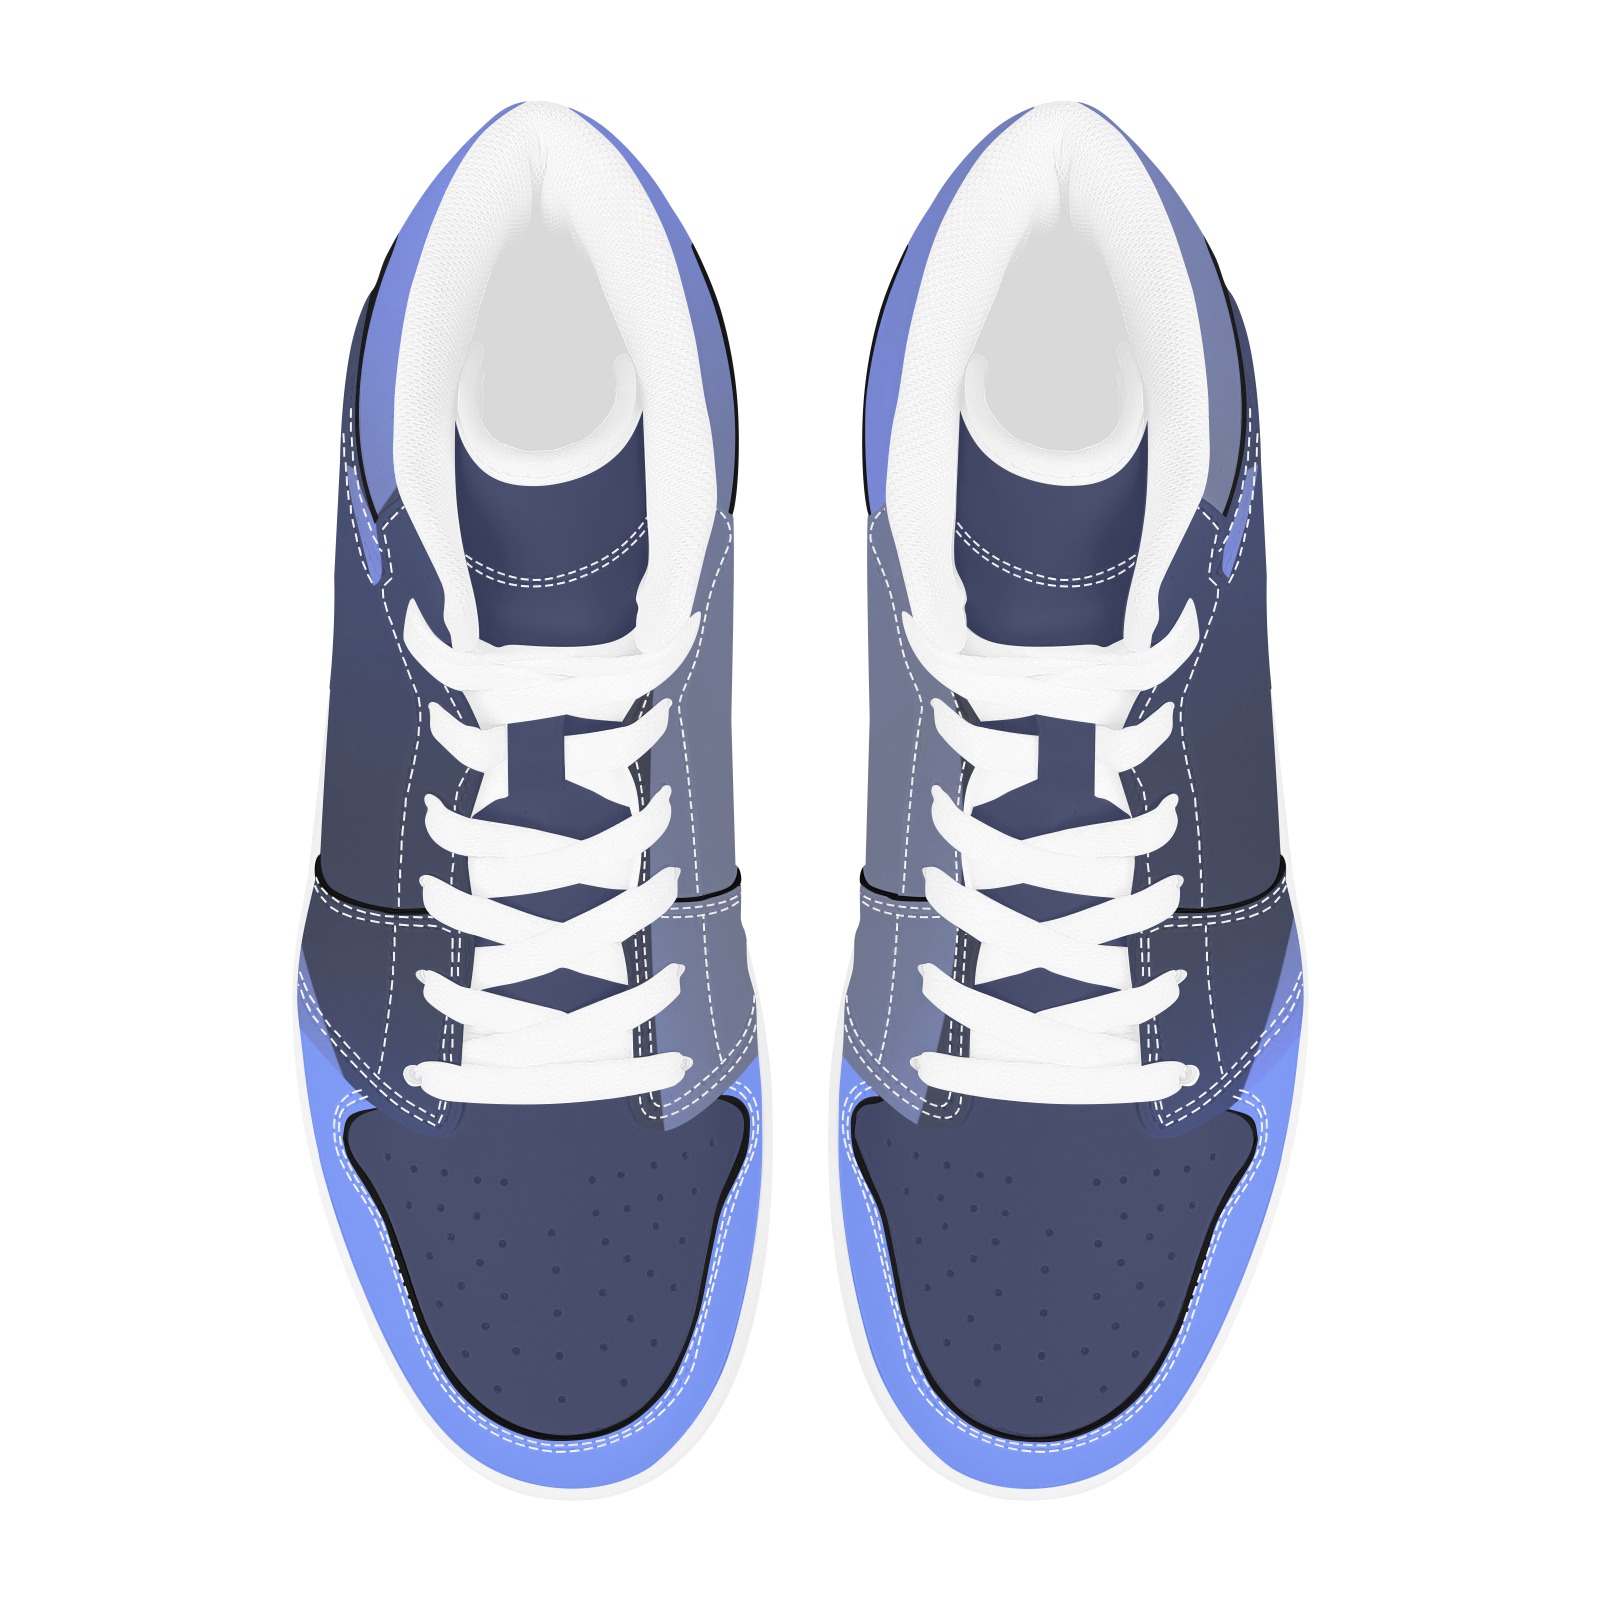 Three Tone Blue Men's High Top Sneakers (Model 20042)